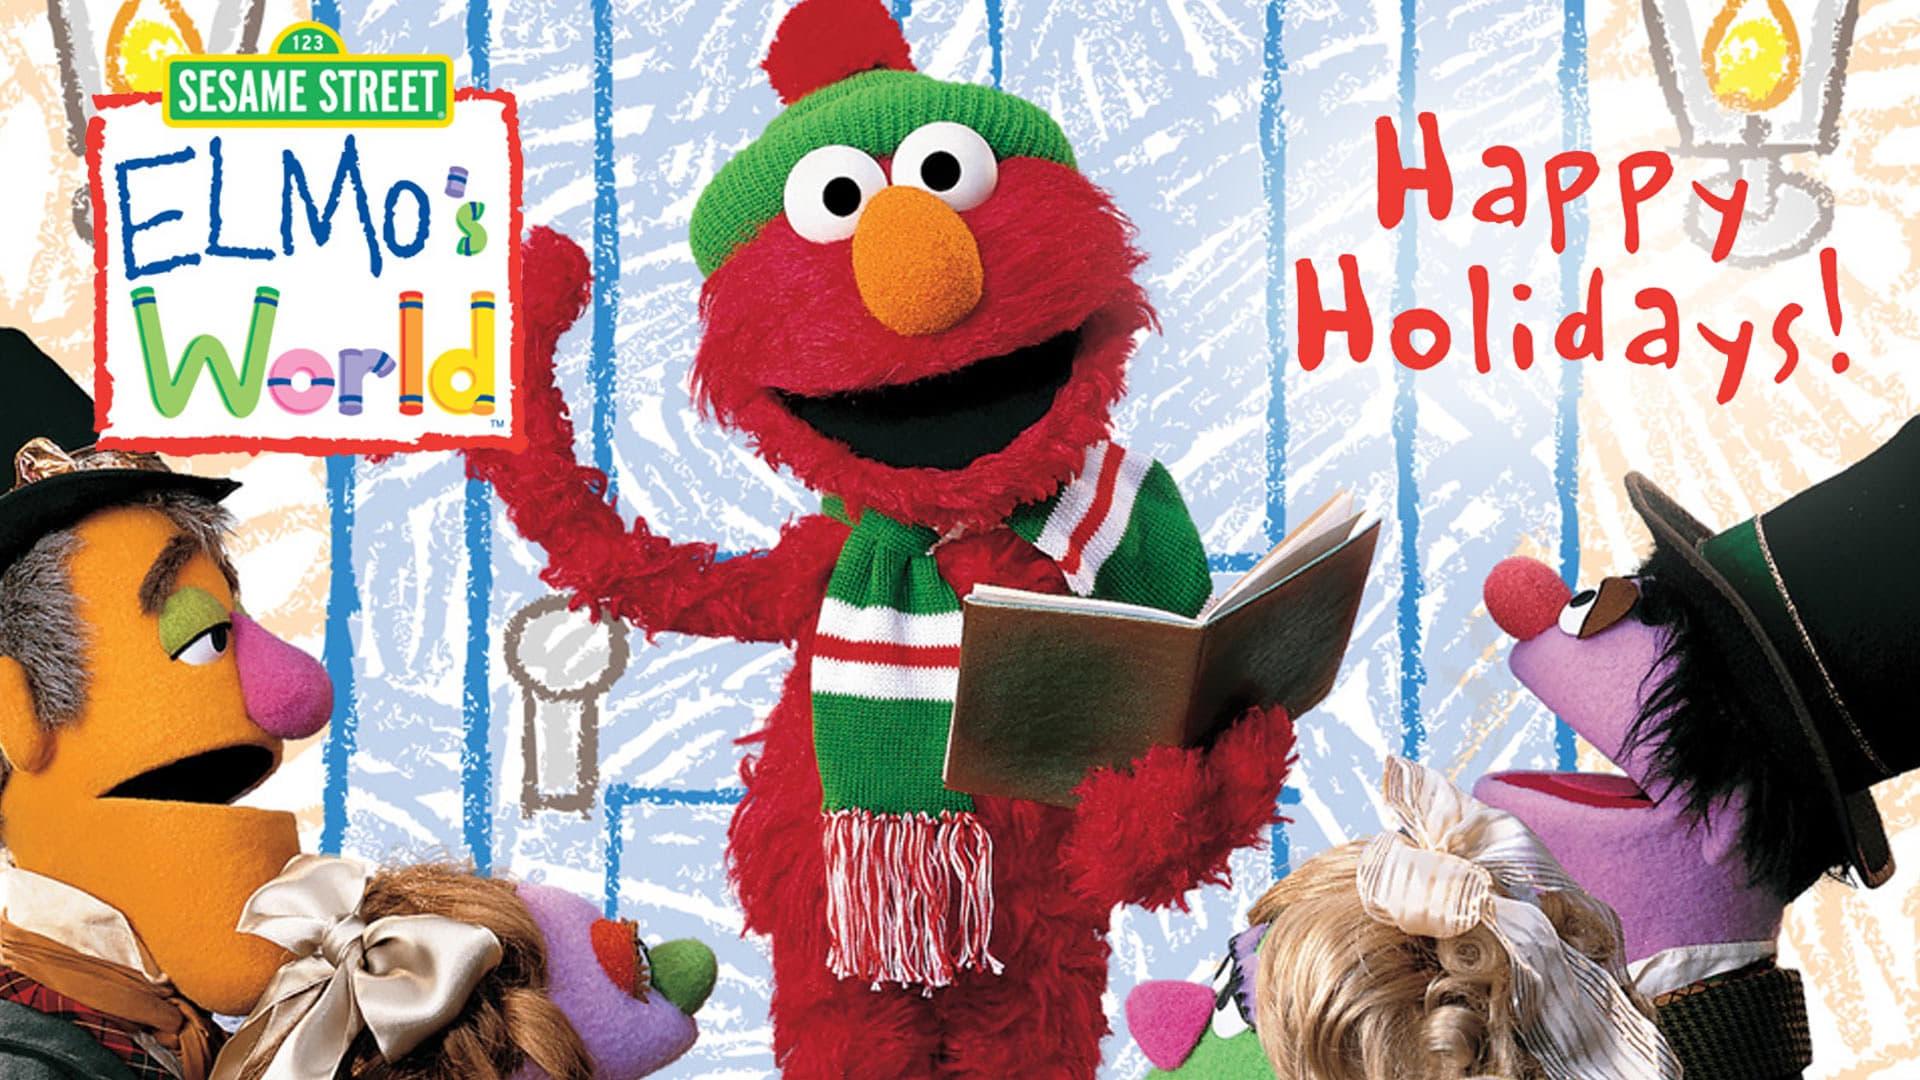 Sesame Street: Elmo's World: Happy Holidays! backdrop